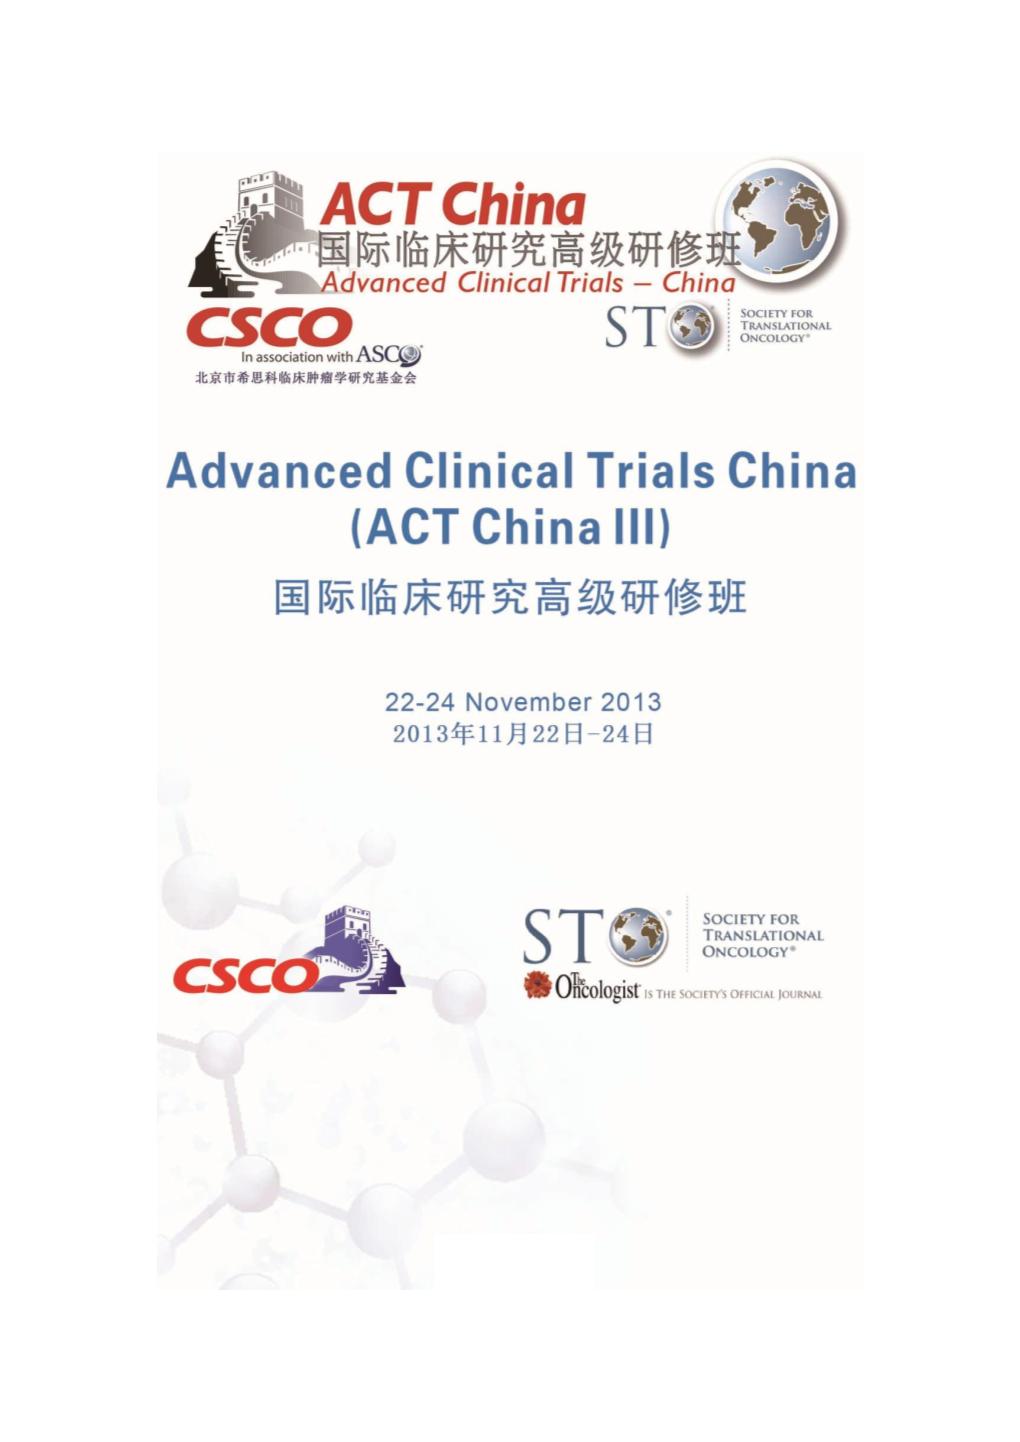 View ACT China III Program